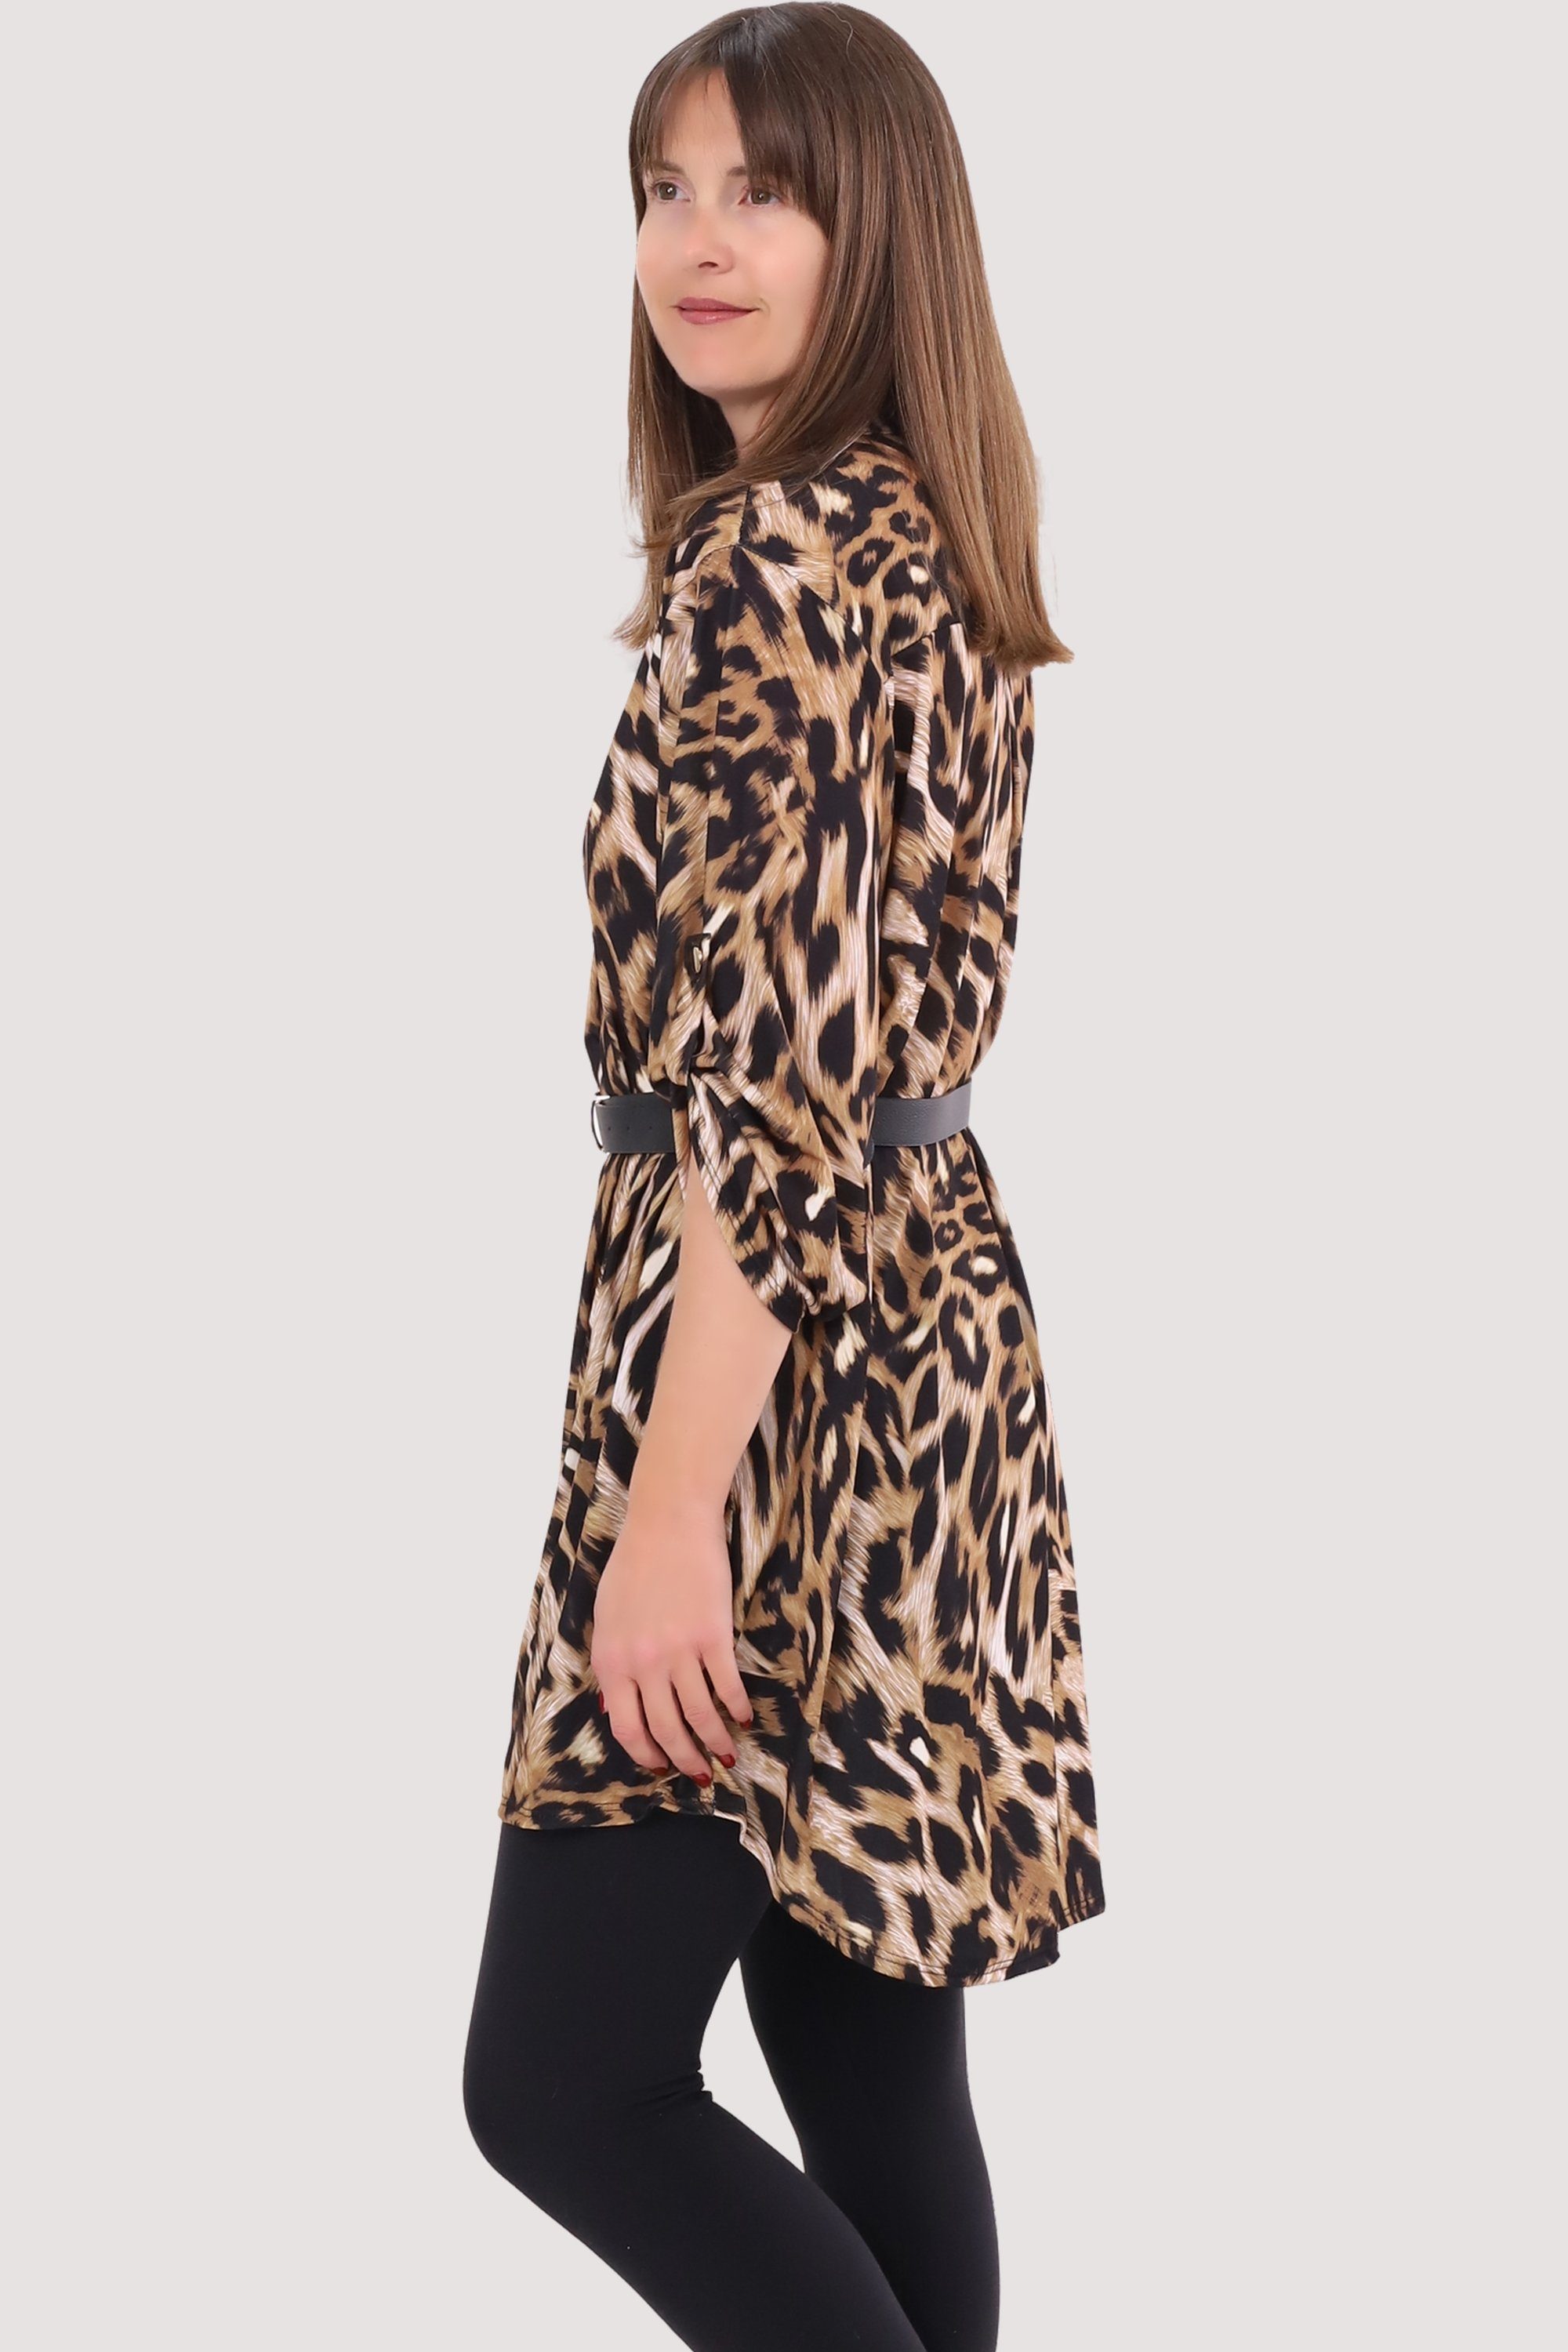 malito more than Animalprint 3 23203 Tunika fashion Gürtel Kleid Bluse Einheitsgröße Gepard mit Druckkleid